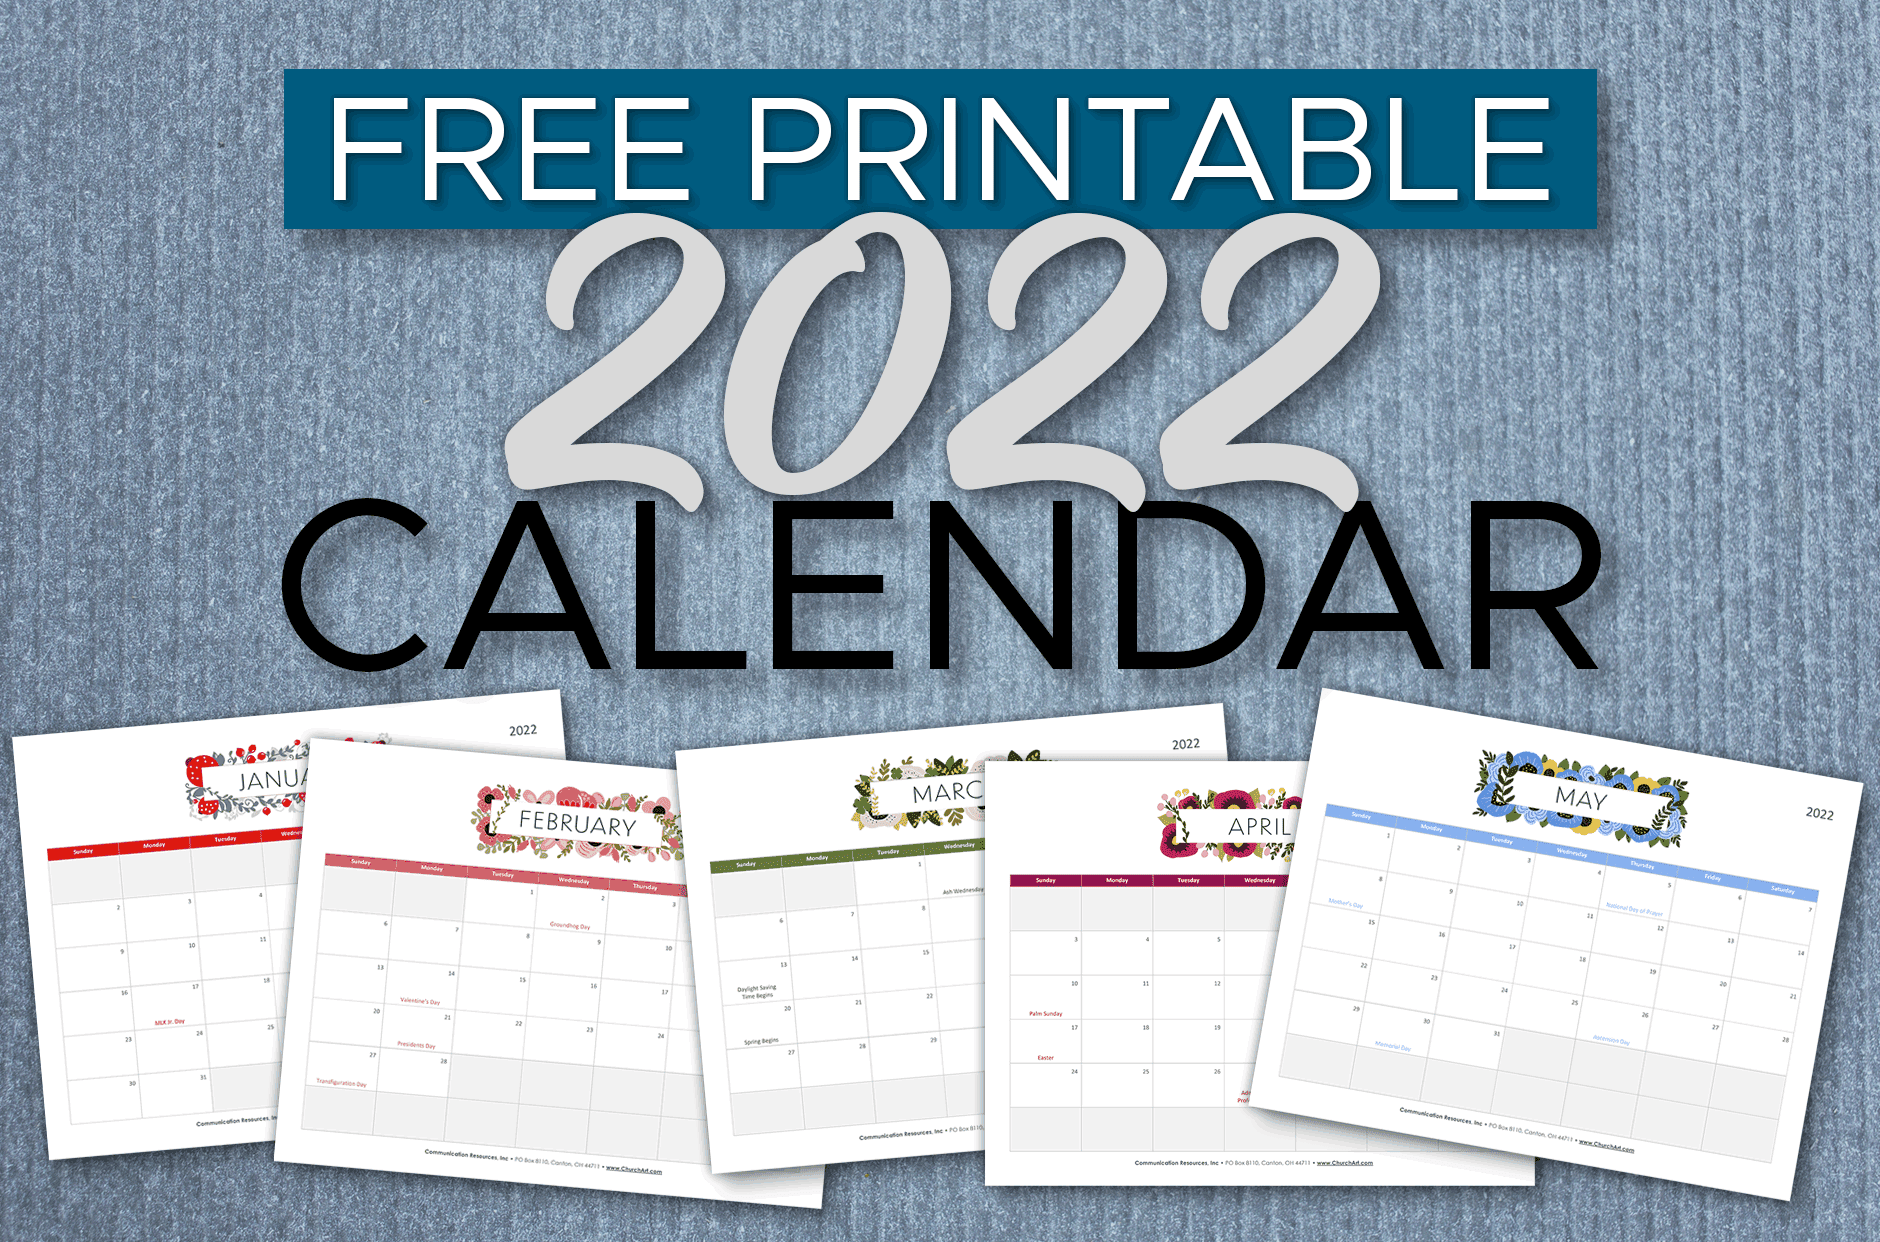 Church Year Calendar 2022 Free Printable 2022 Church Calendar | Churchart.com Blog